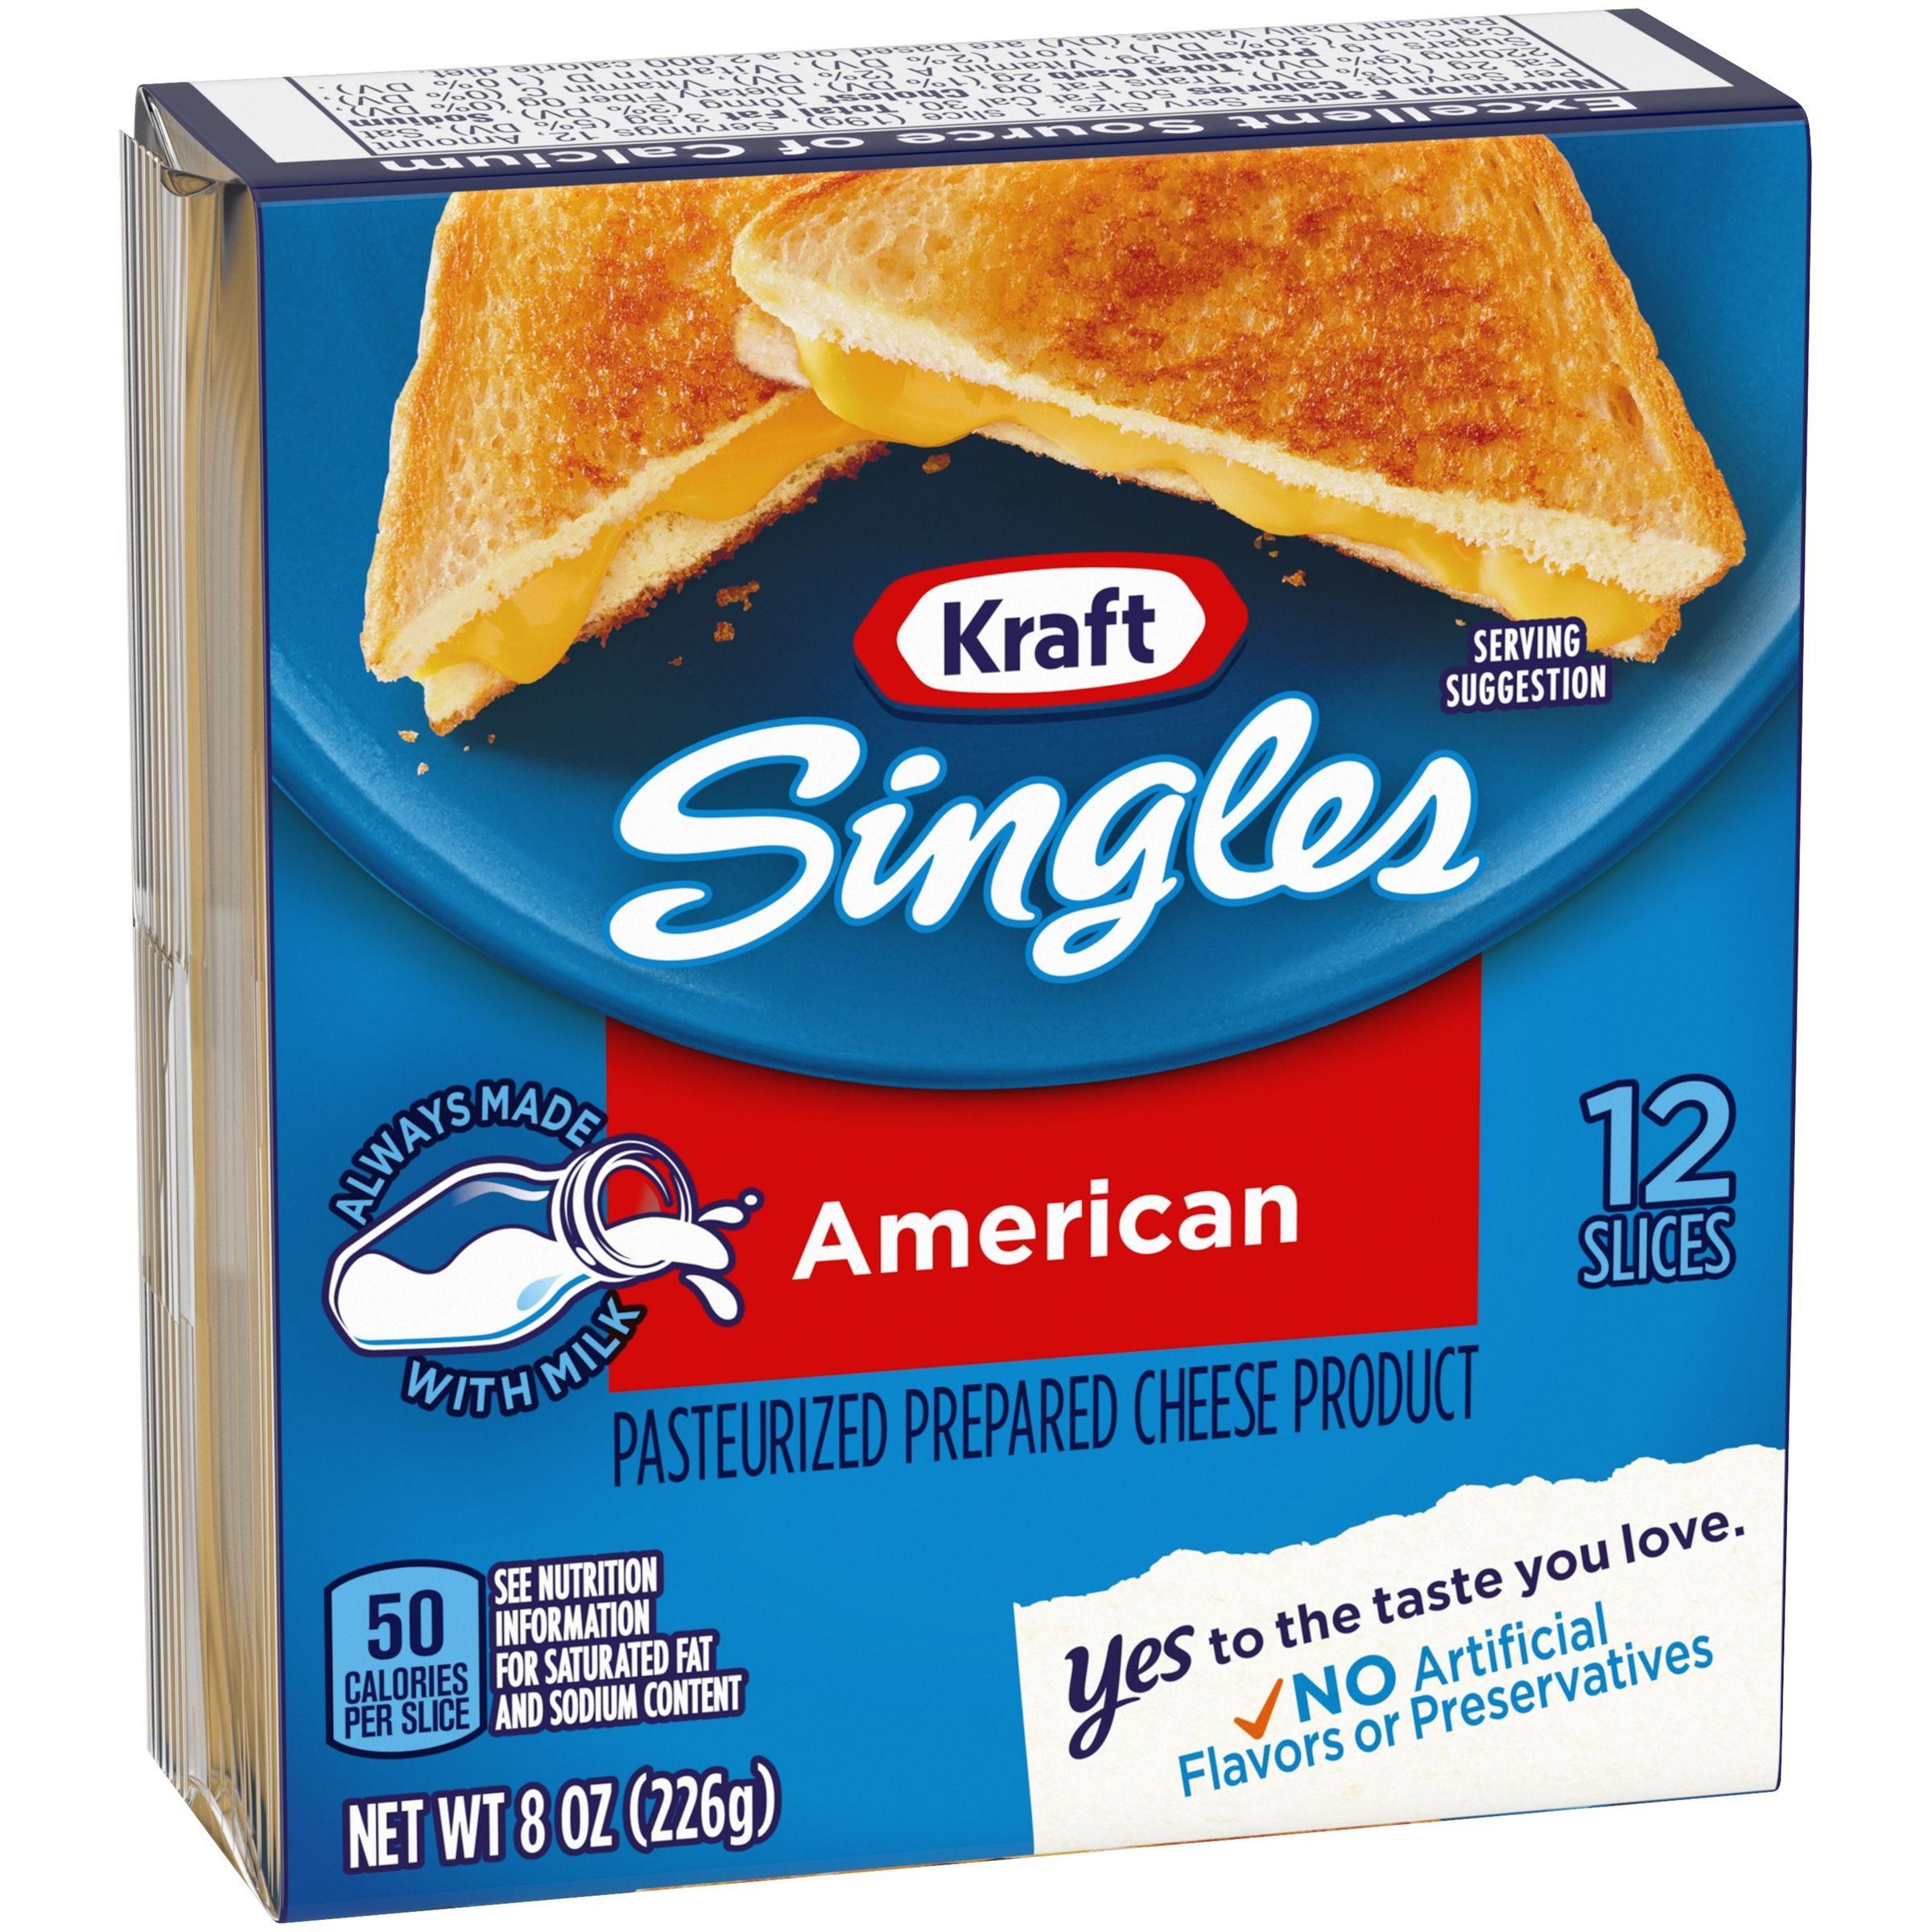 Kraft Singles American Cheese 12 Slices - 8 oz